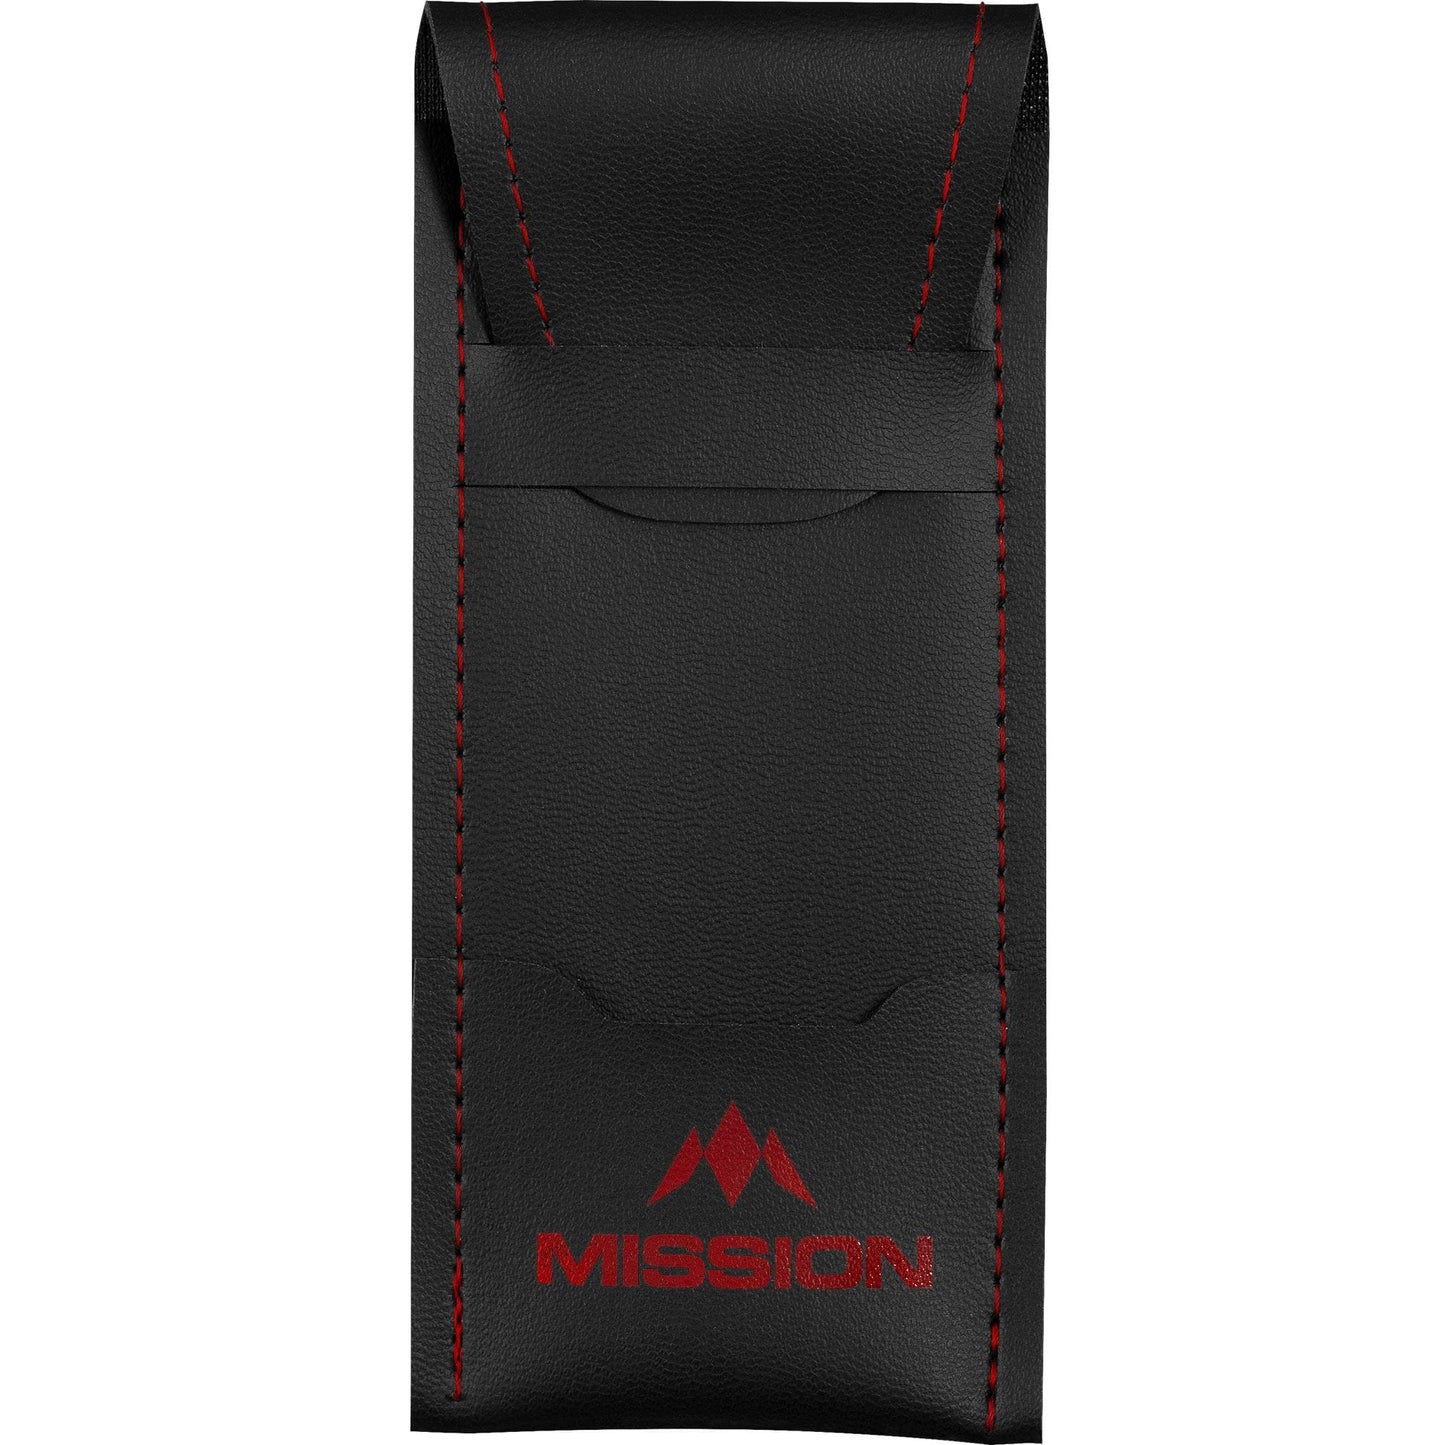 Mission Sport 8 Darts Case - Black Bar Wallet with Trim Red